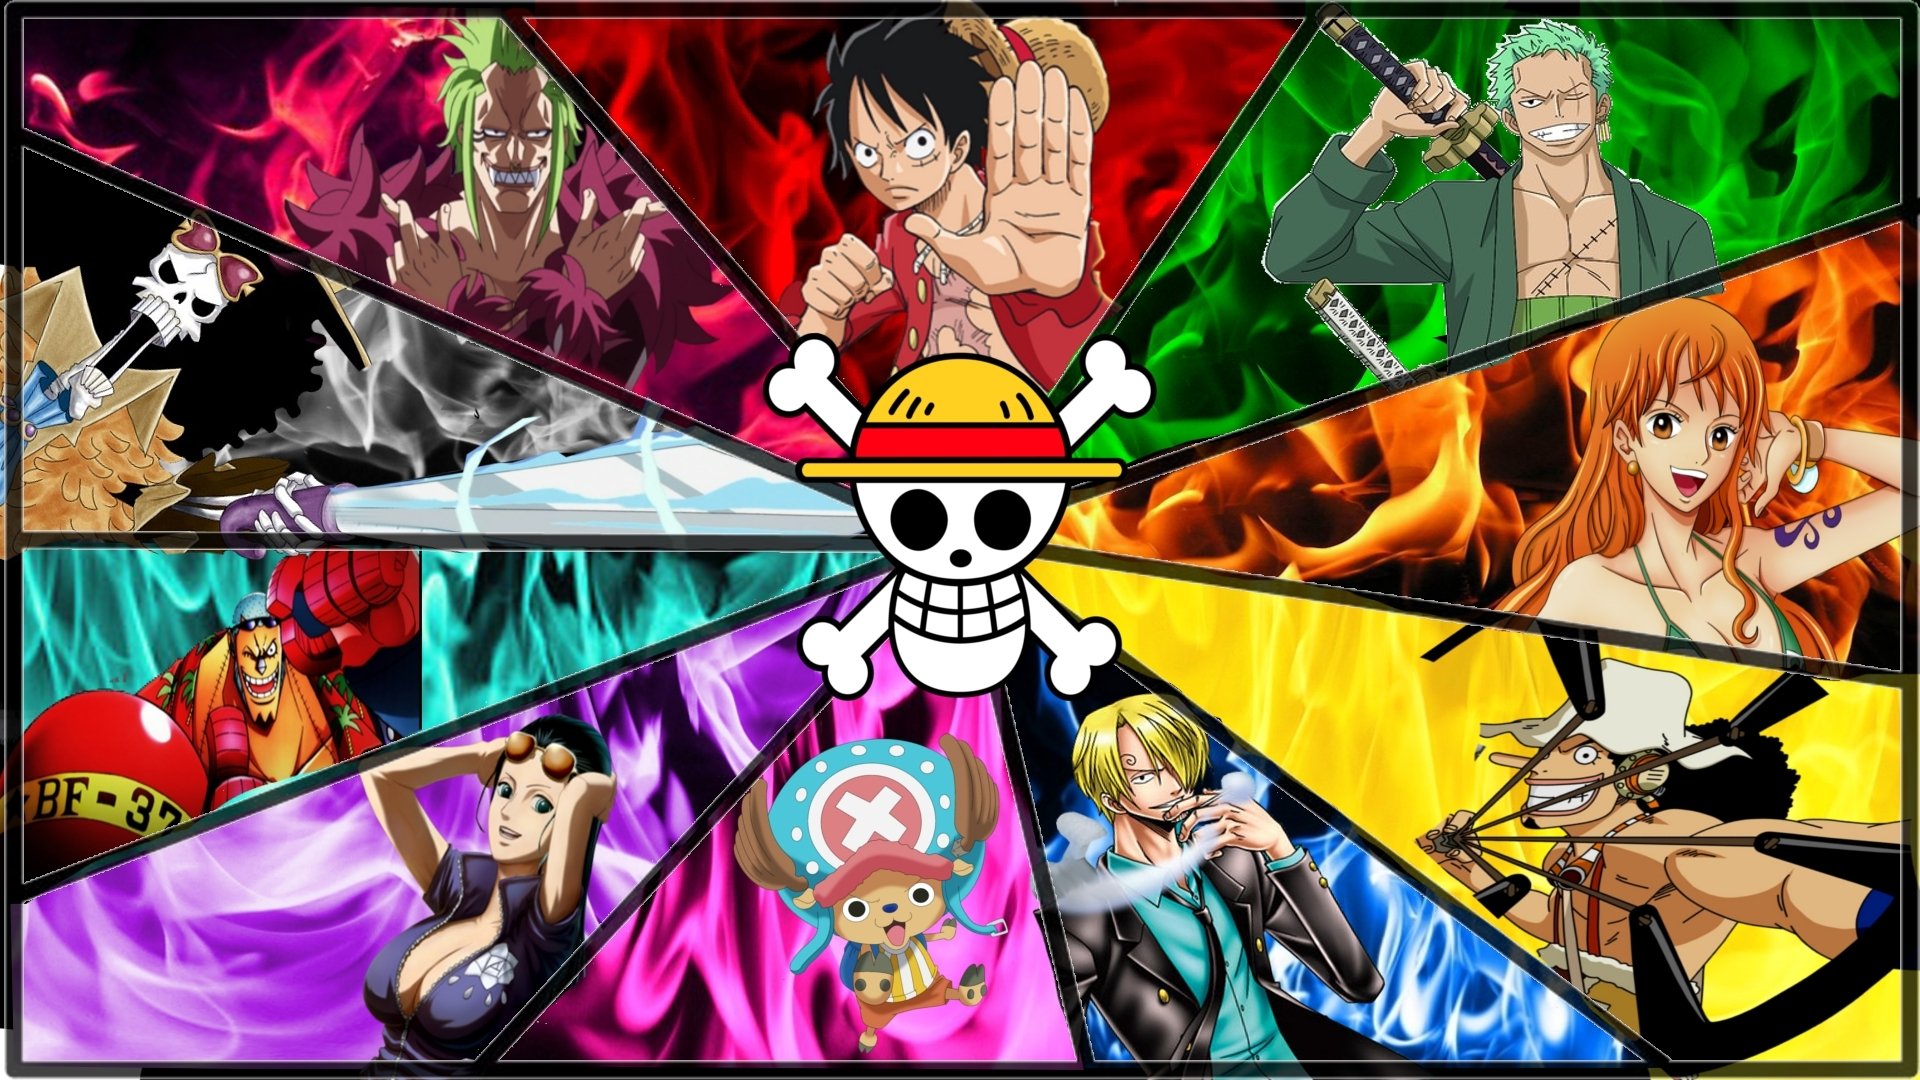 1440p Download Anime One Piece Episode 981 Subtitle Indonesia 7p Nonton Ehowkeys